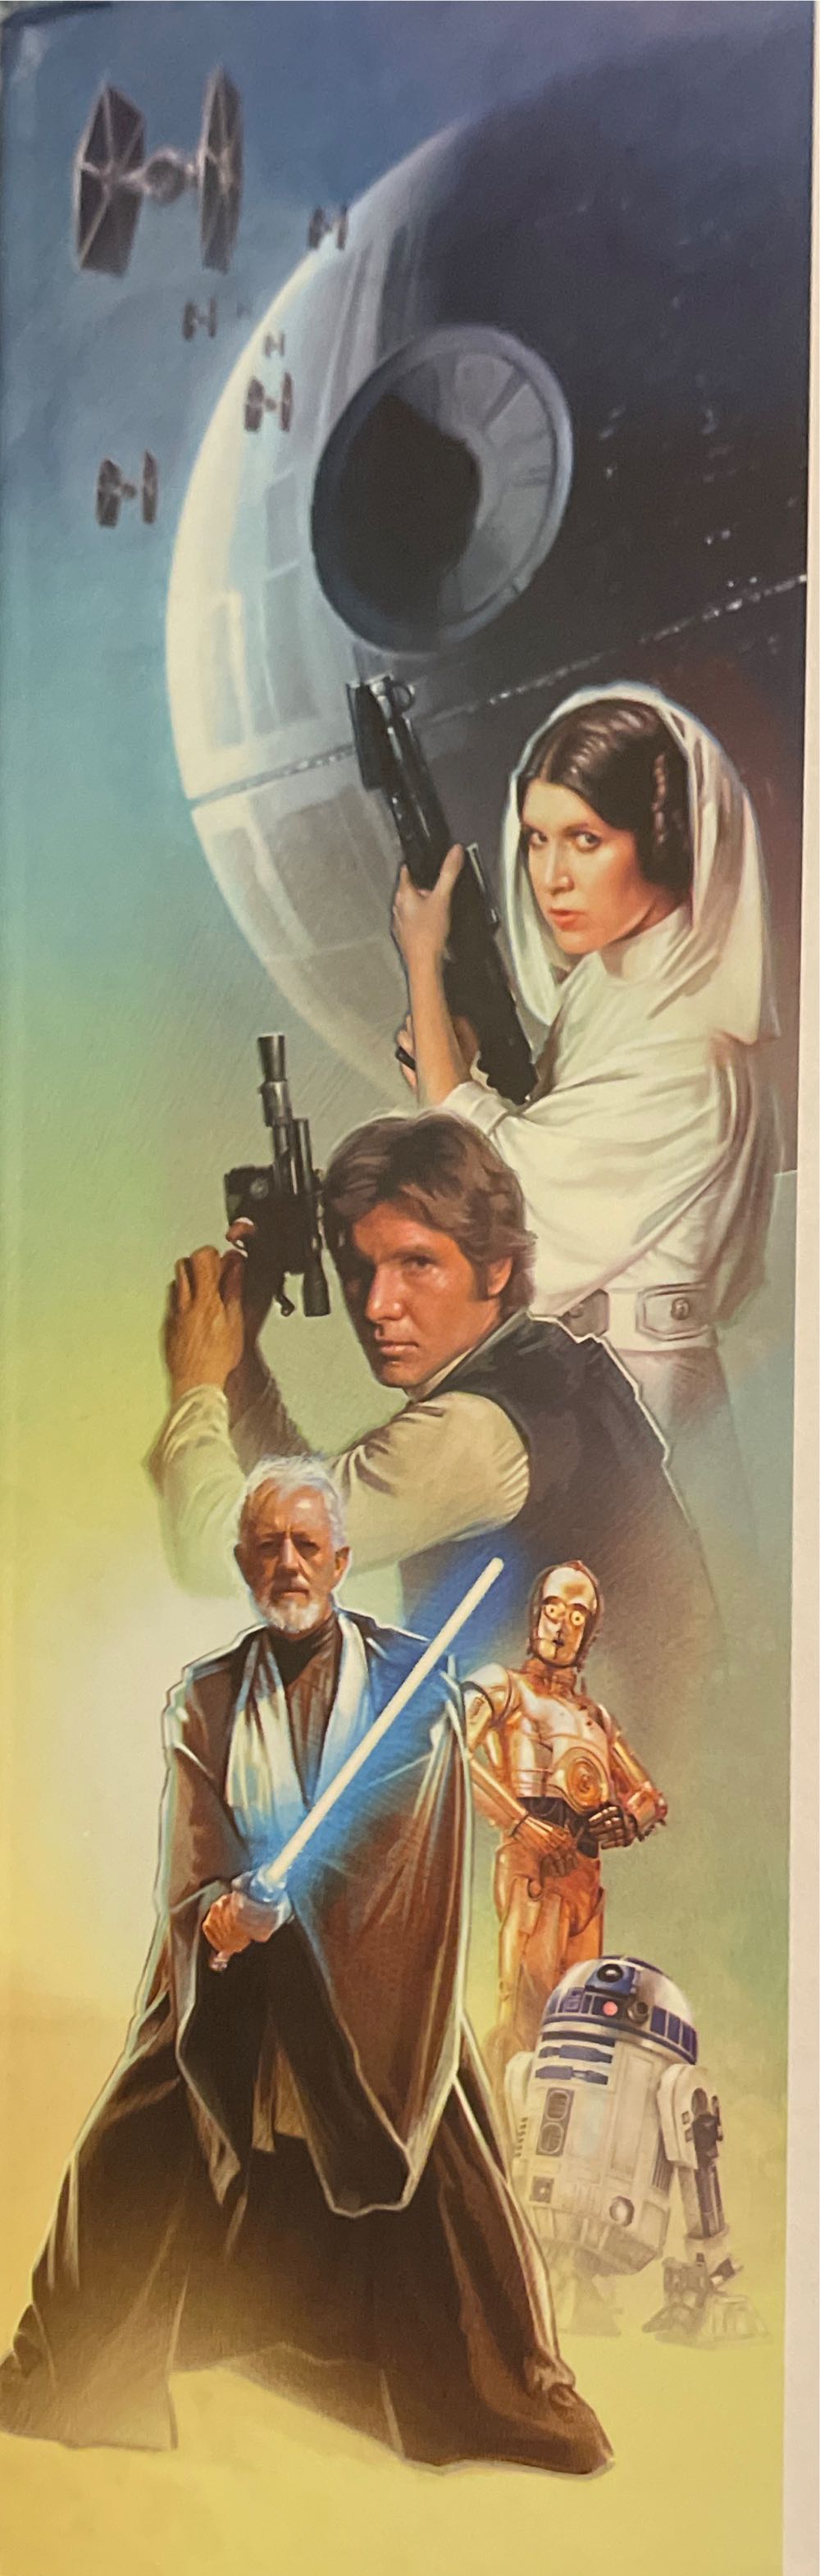 Star Wars The Skywalker Saga - Delilah Dawson (Disney Lucasfilm Press) book collectible [Barcode 9781368041539] - Main Image 4